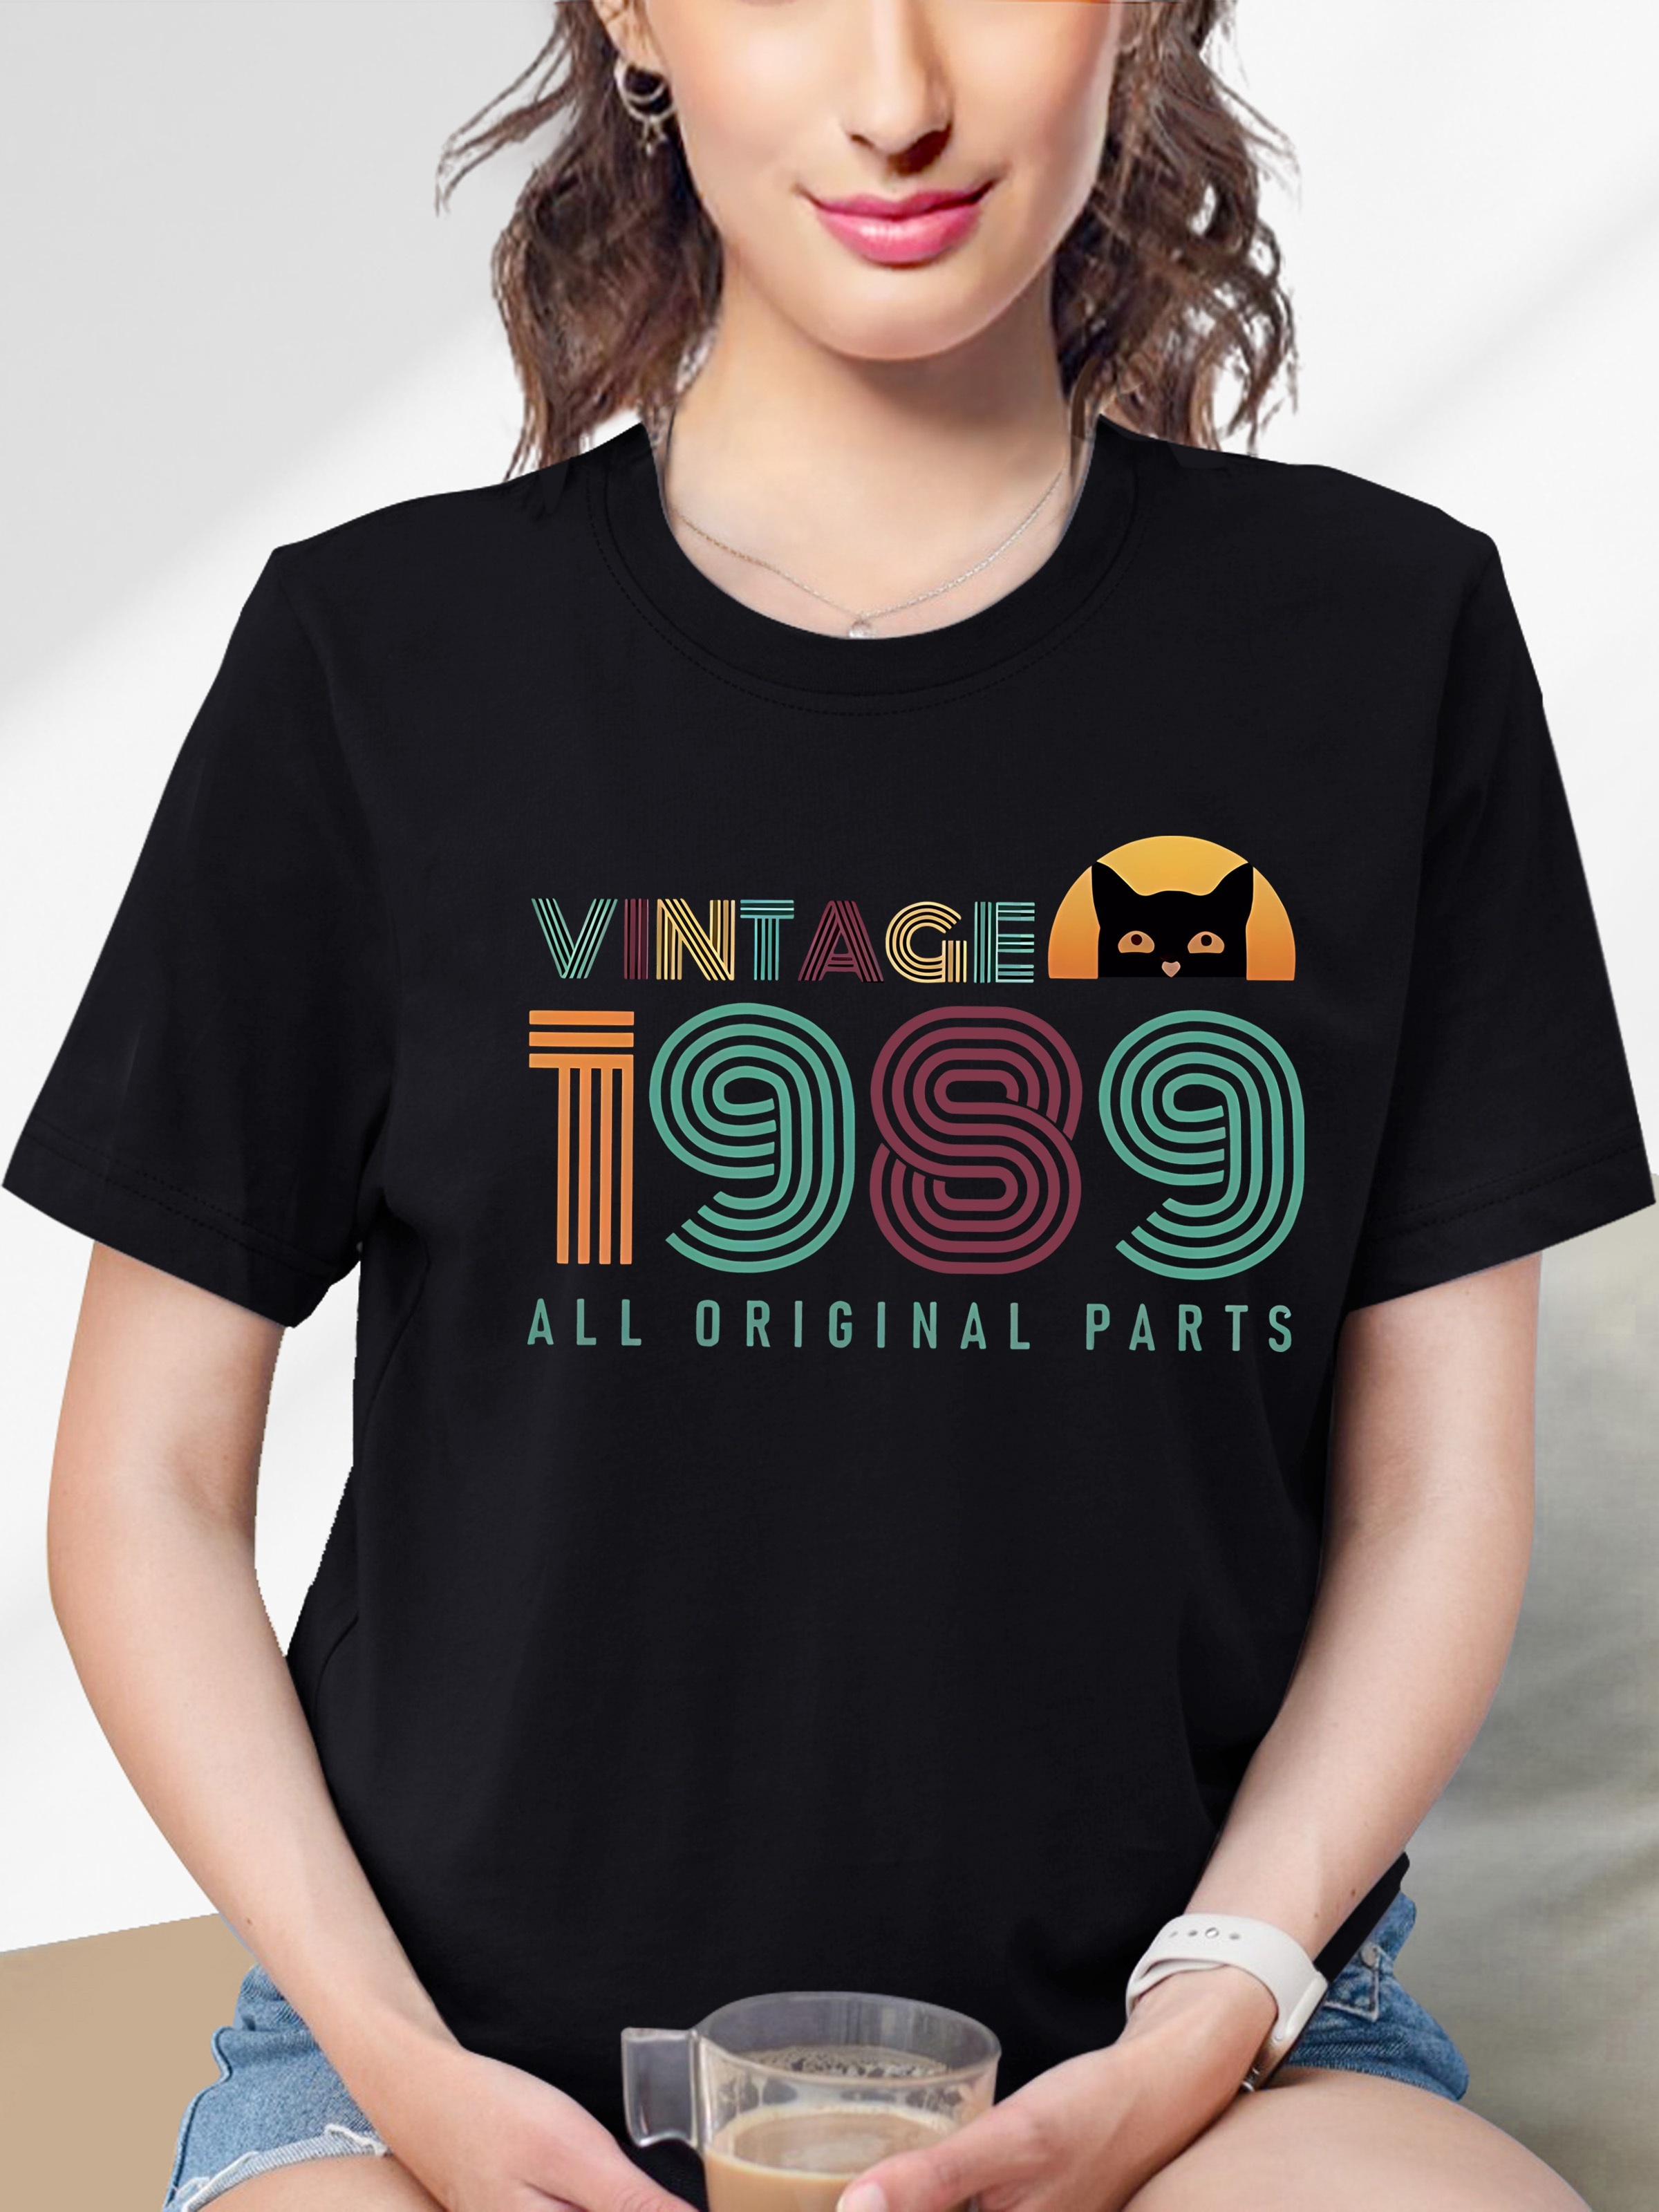 Men's & Women's Vintage Sports T-shirts